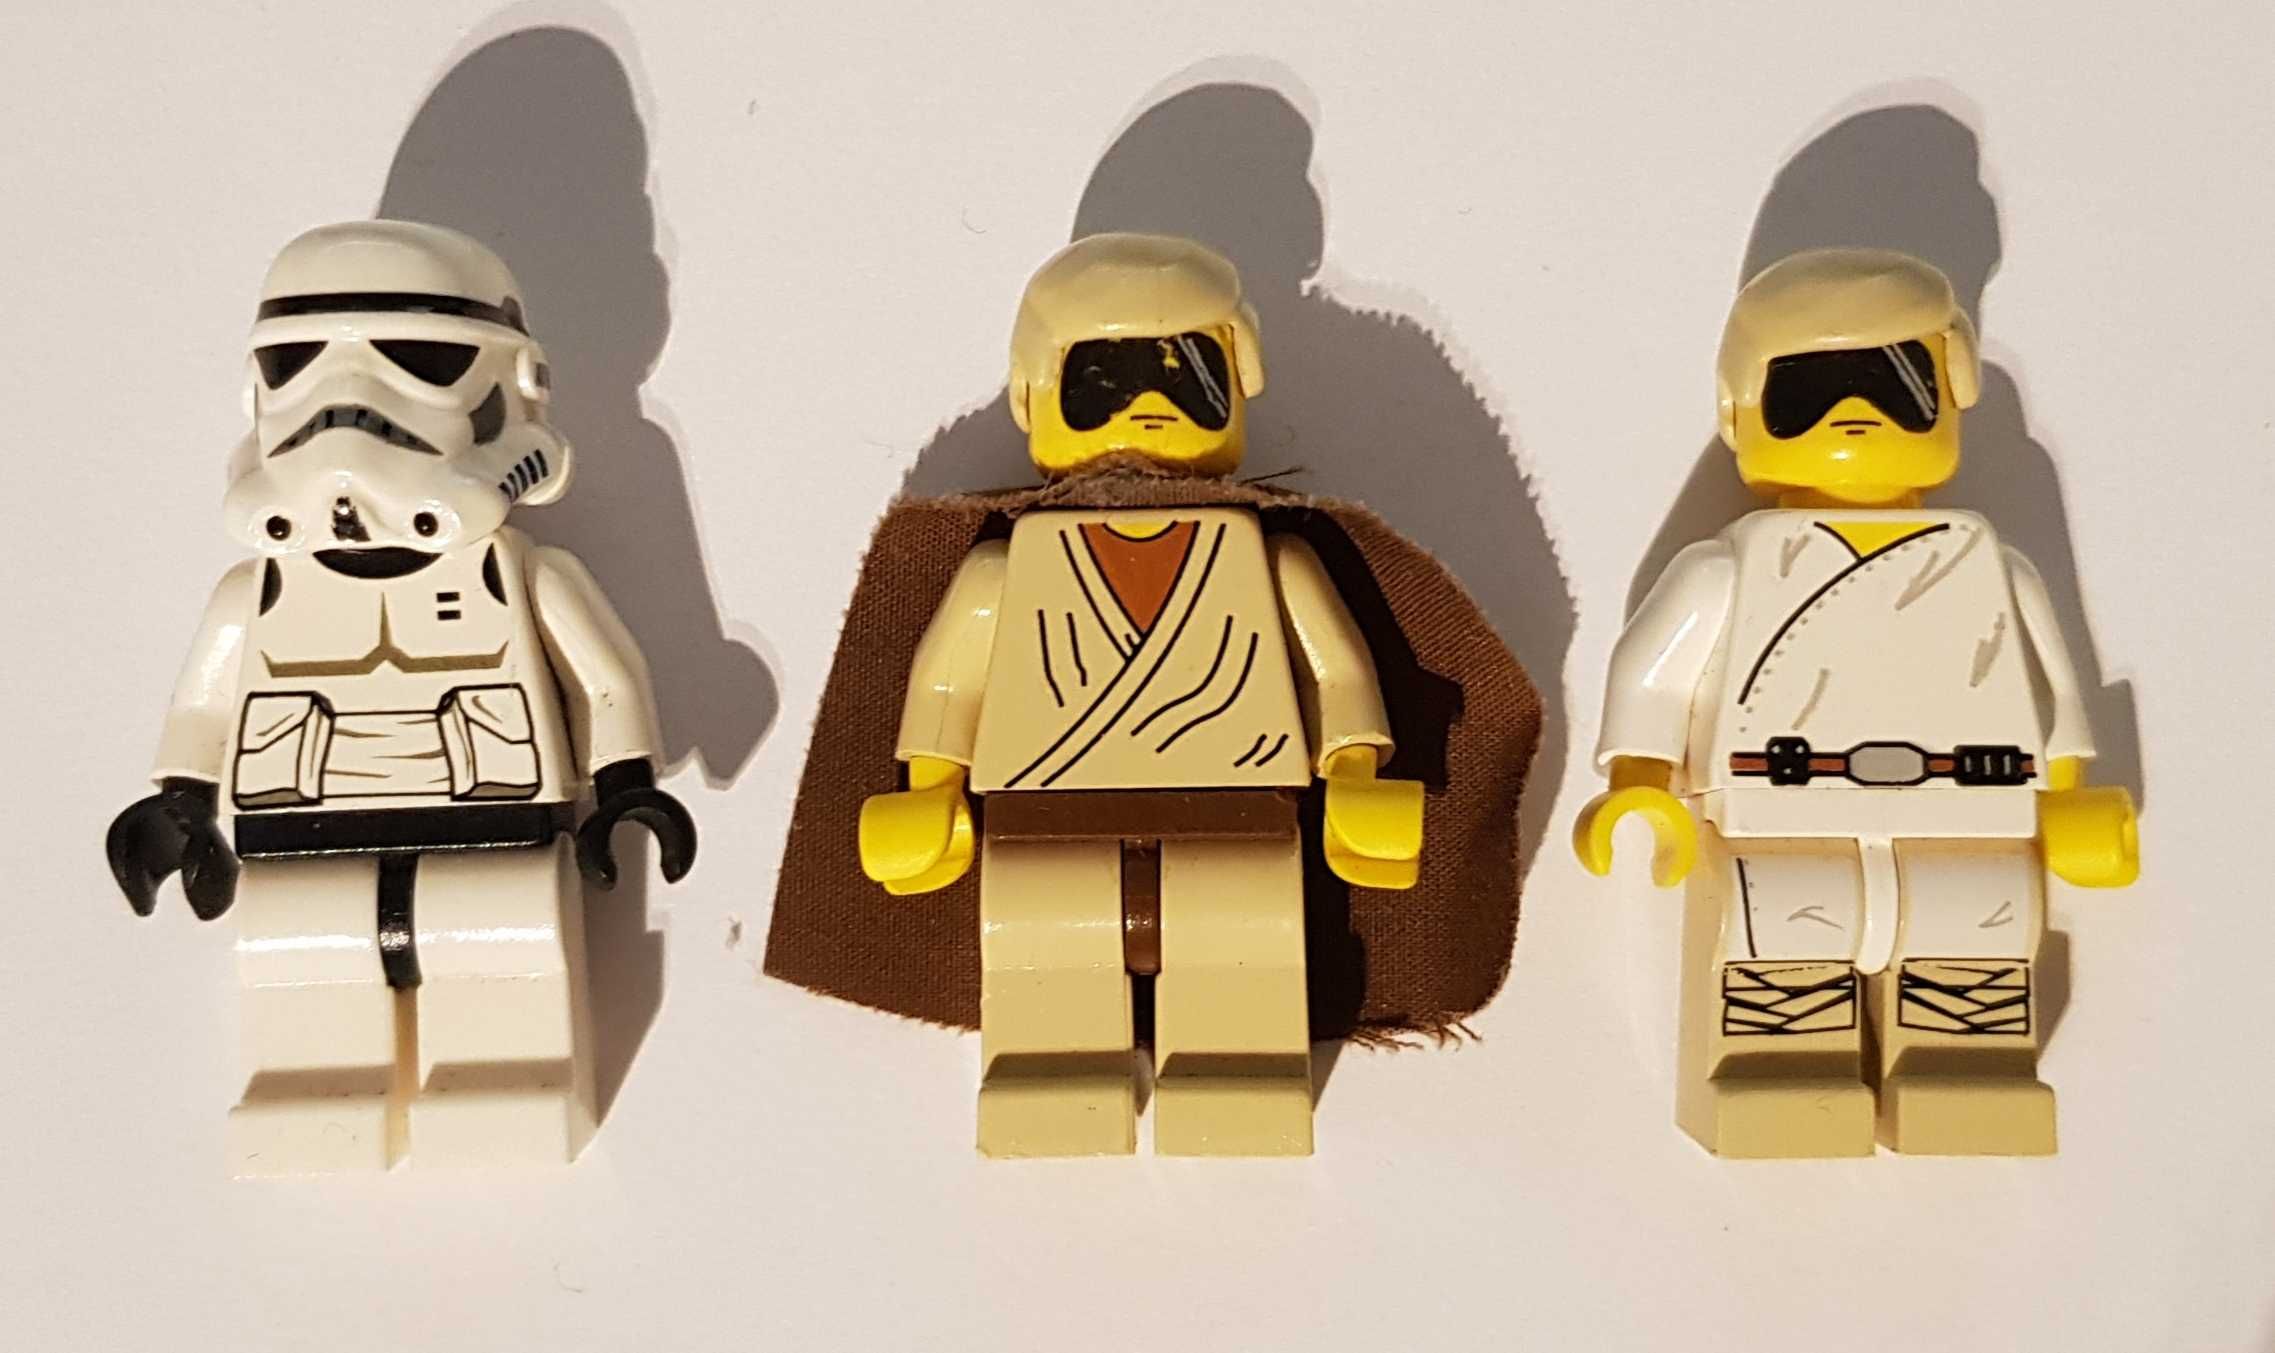 Lego star wars obi-wan, ben kenobi, luke, figurki 3 szt., mix,mieszane